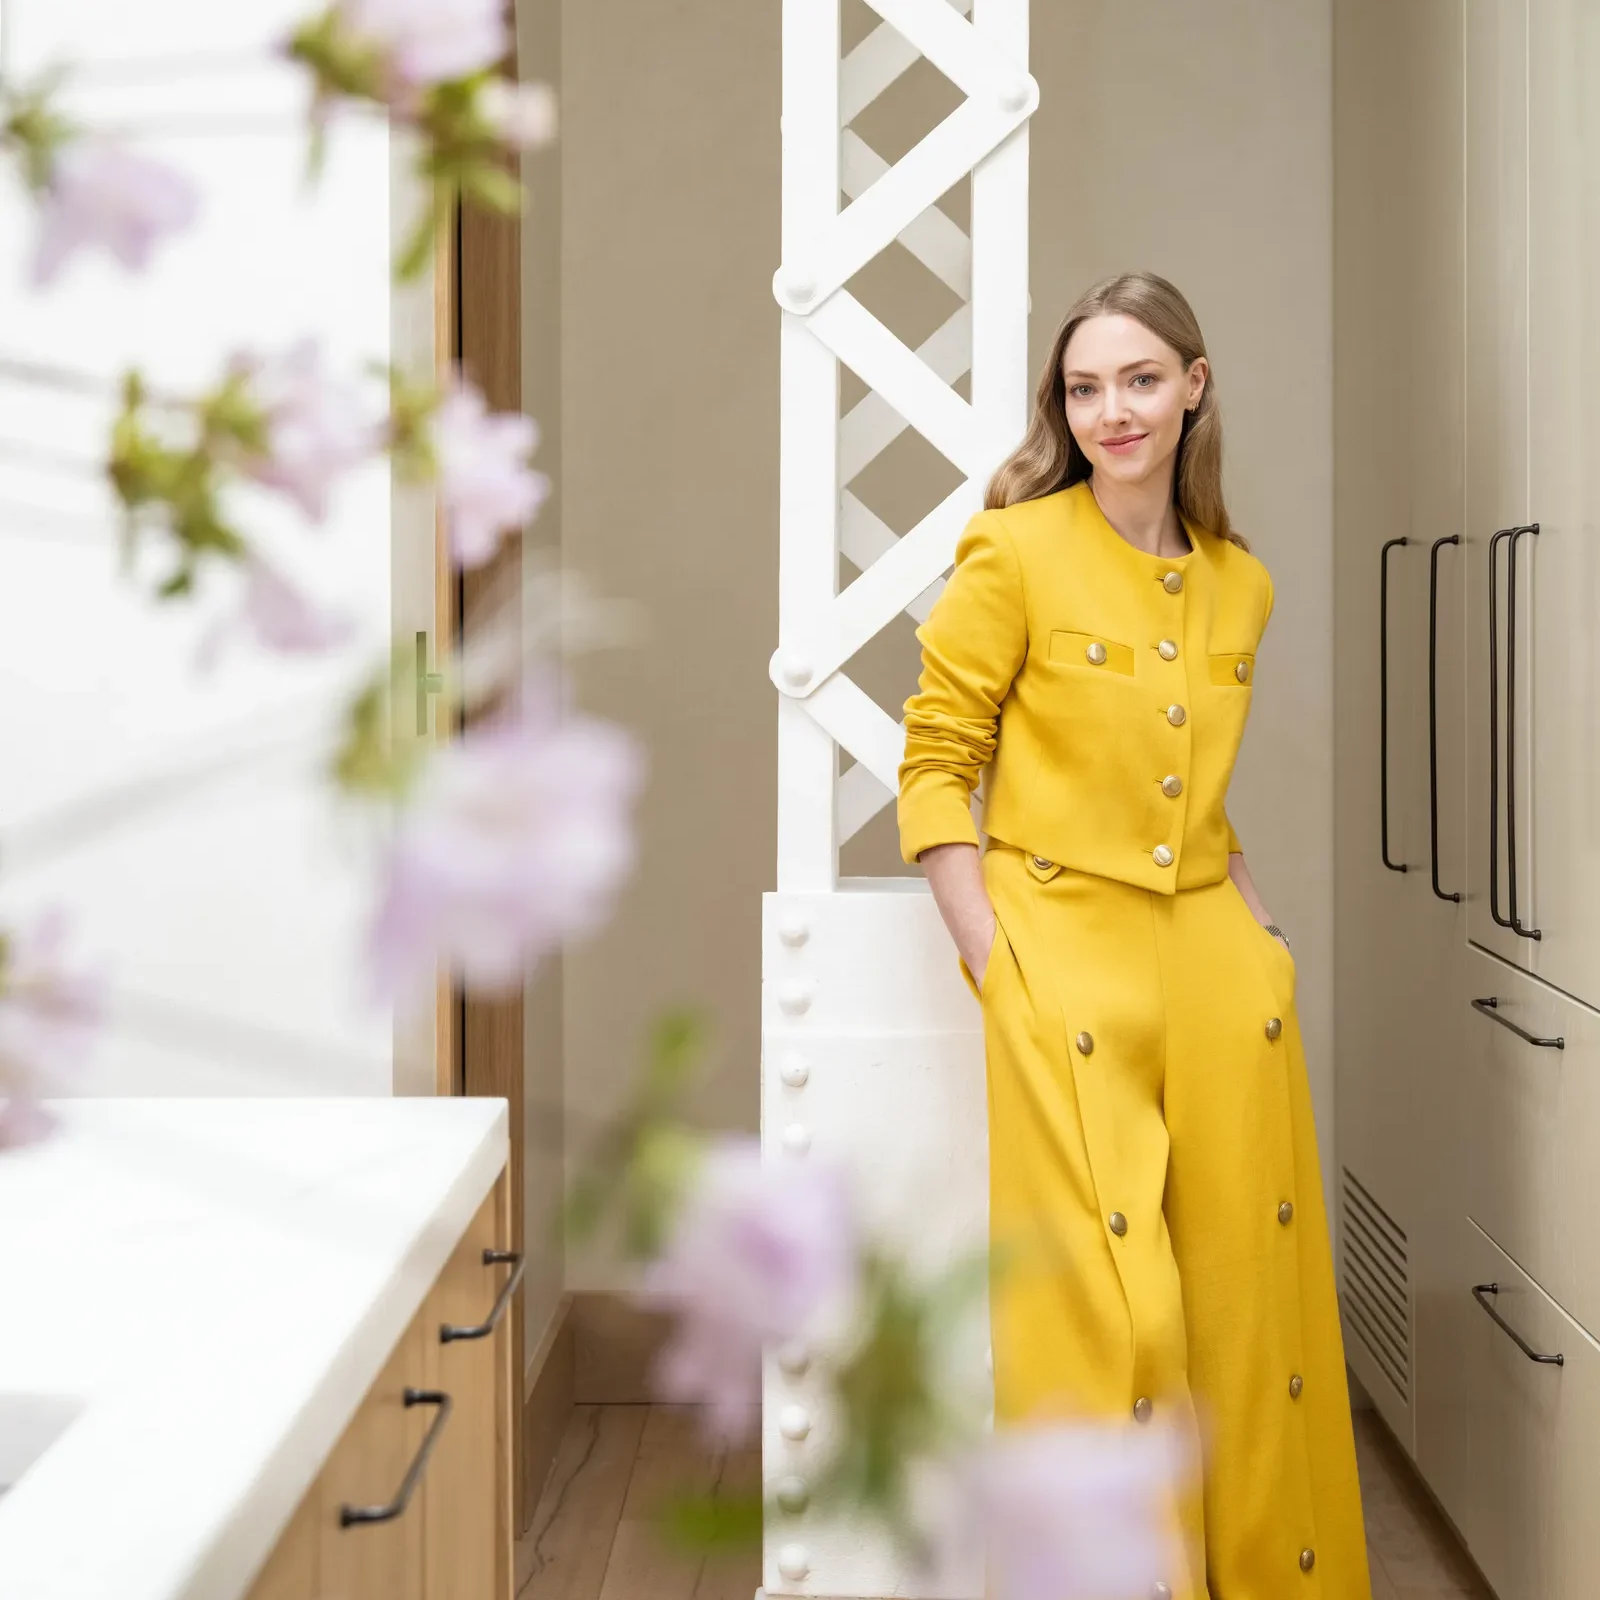 To σπίτι της Amanda Seyfried φέρνει την ηρεμία της εξοχής στην πολυσύχναστη Νέα Υόρκη